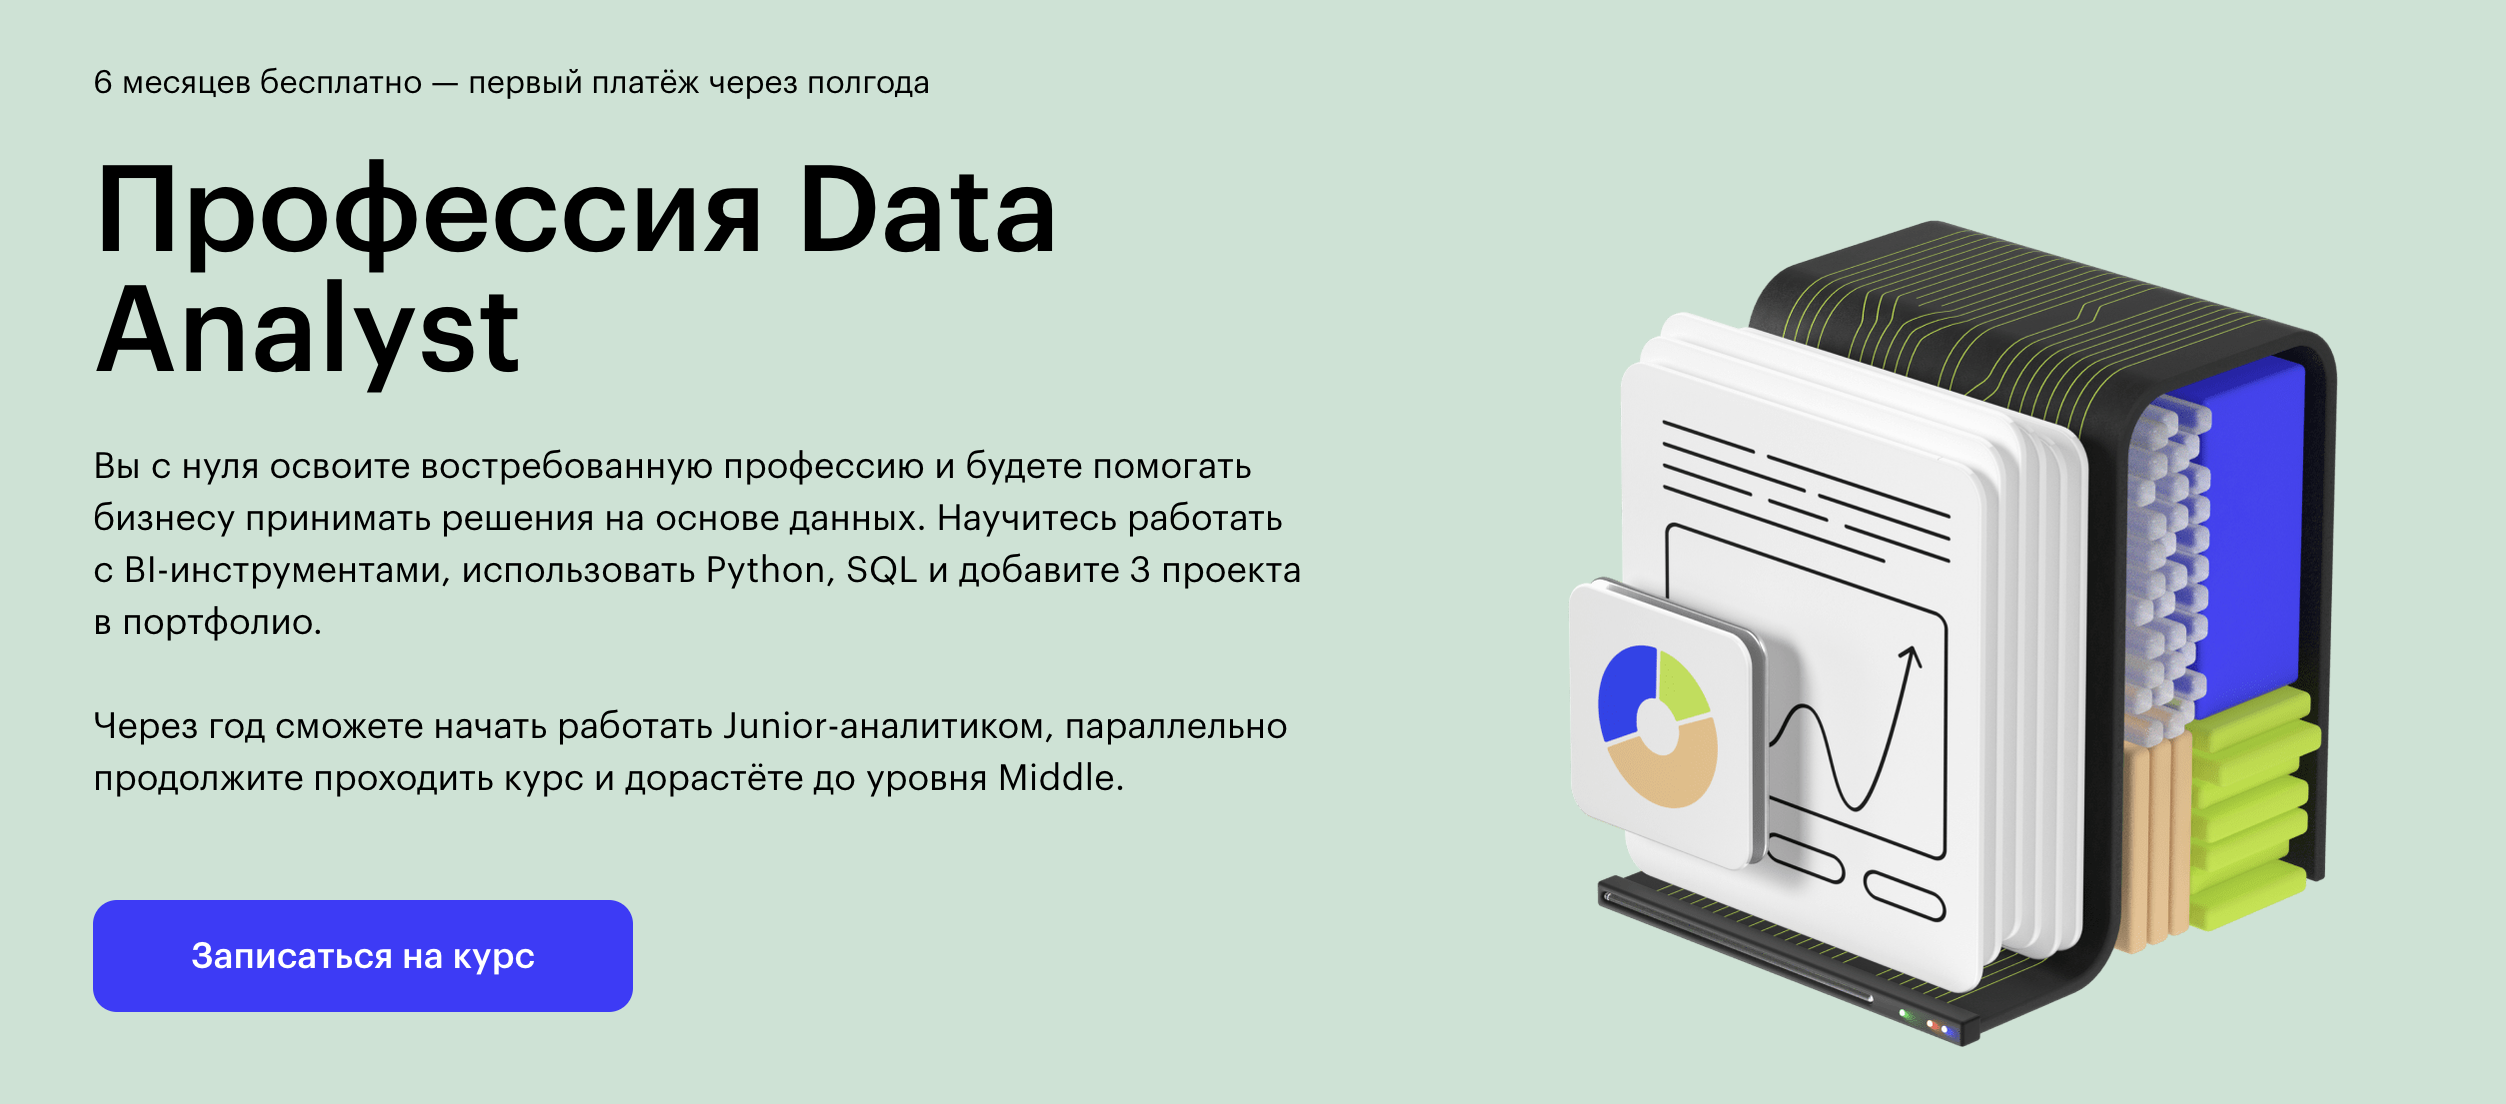 Skillbox: Профессия Data Analyst